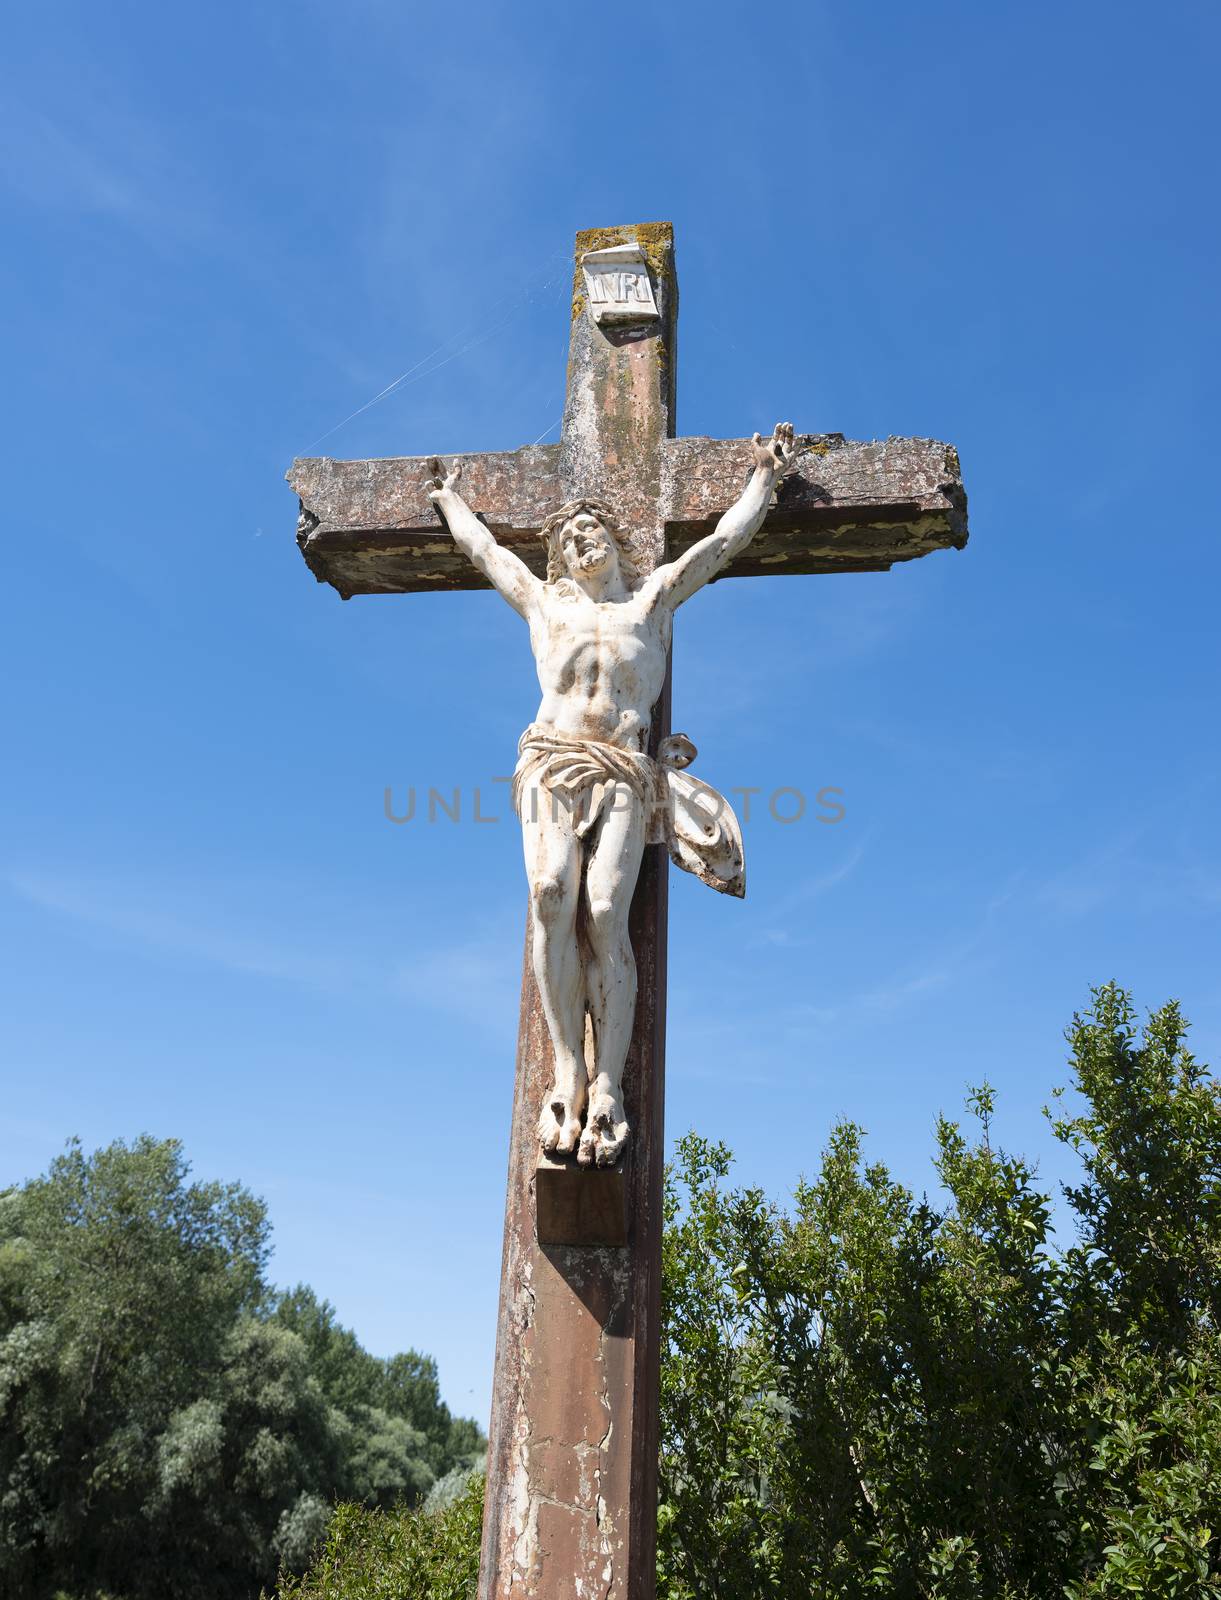 statue of jesus christ on cross in france. under blue sky